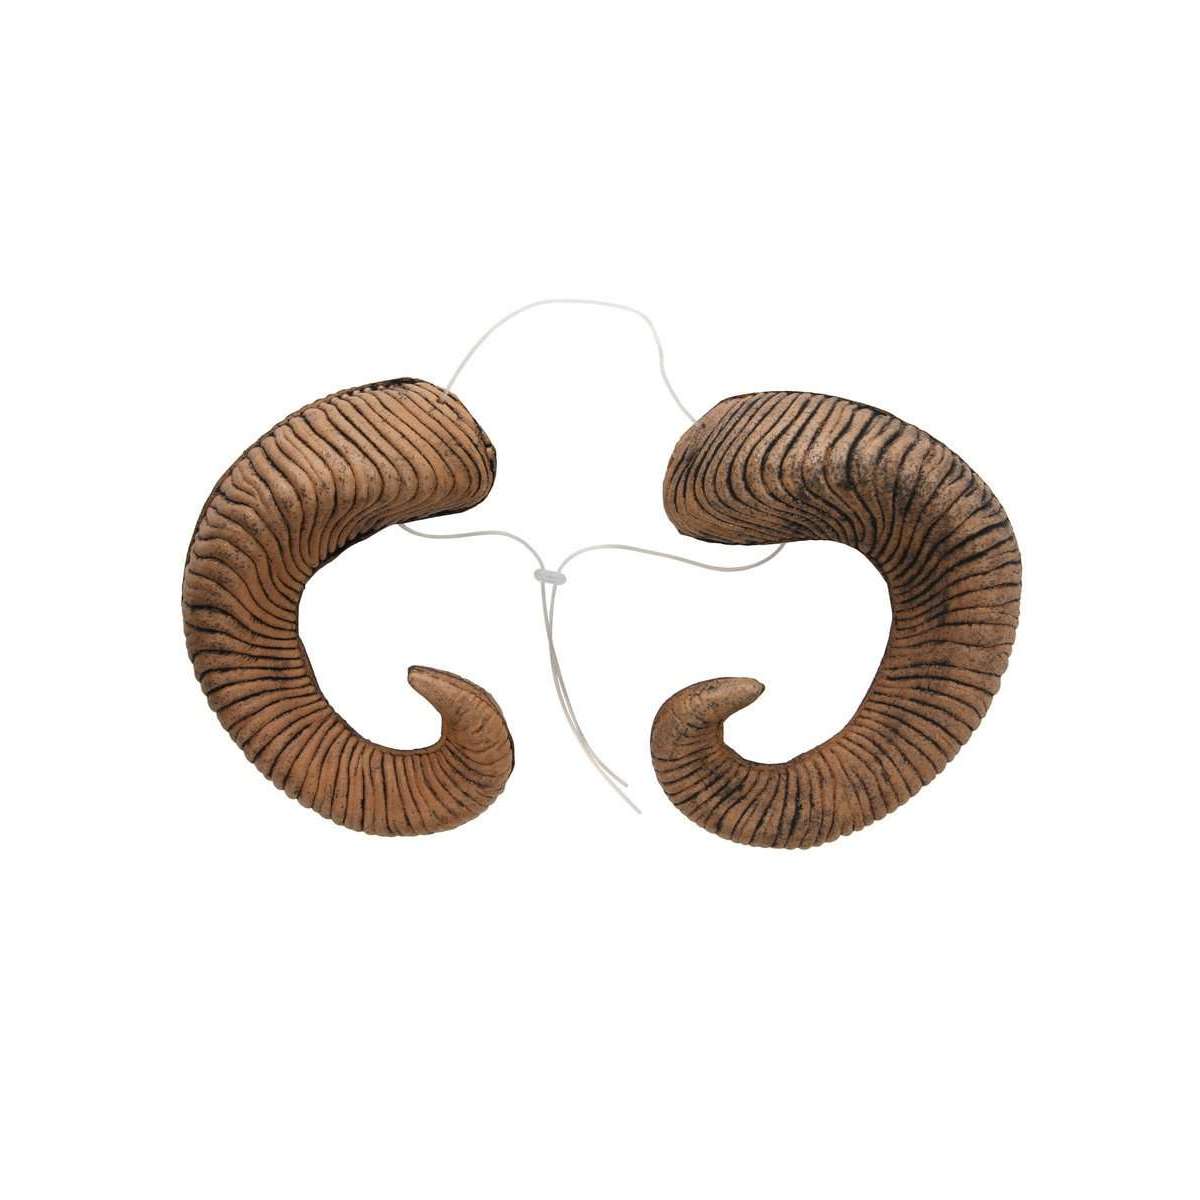 Giant Ram Horns Headband